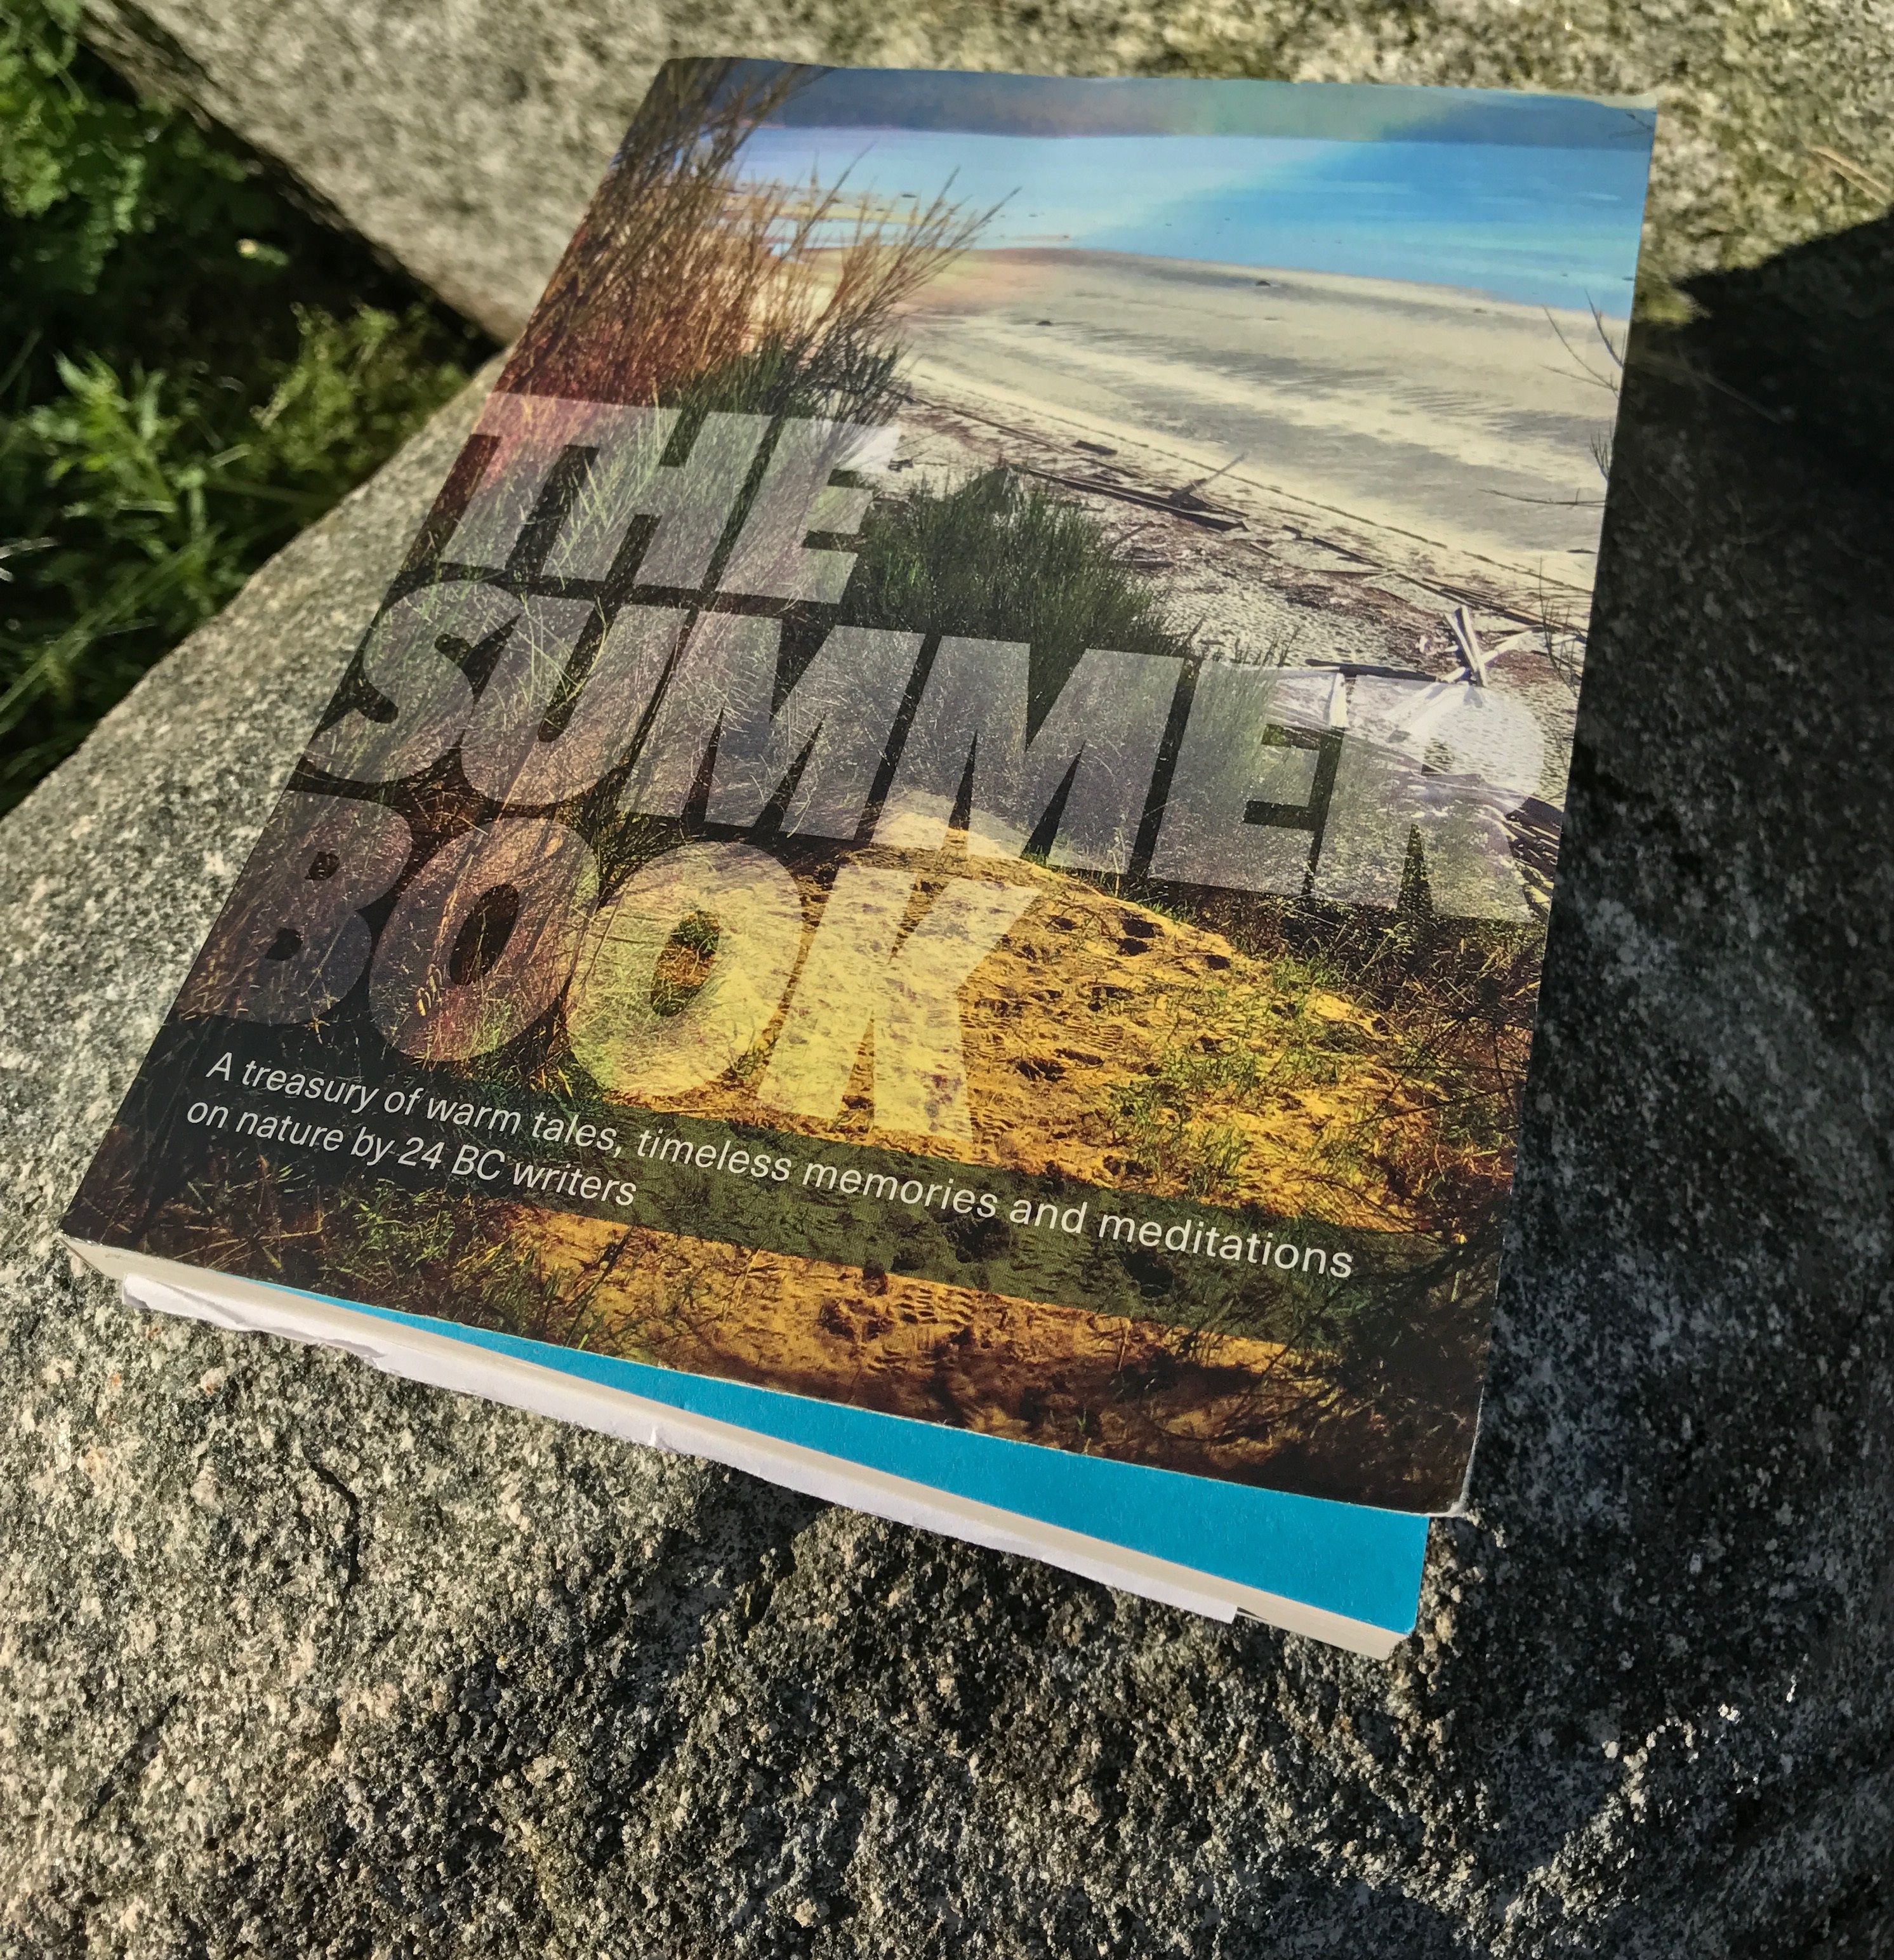 The Summer Book is summer